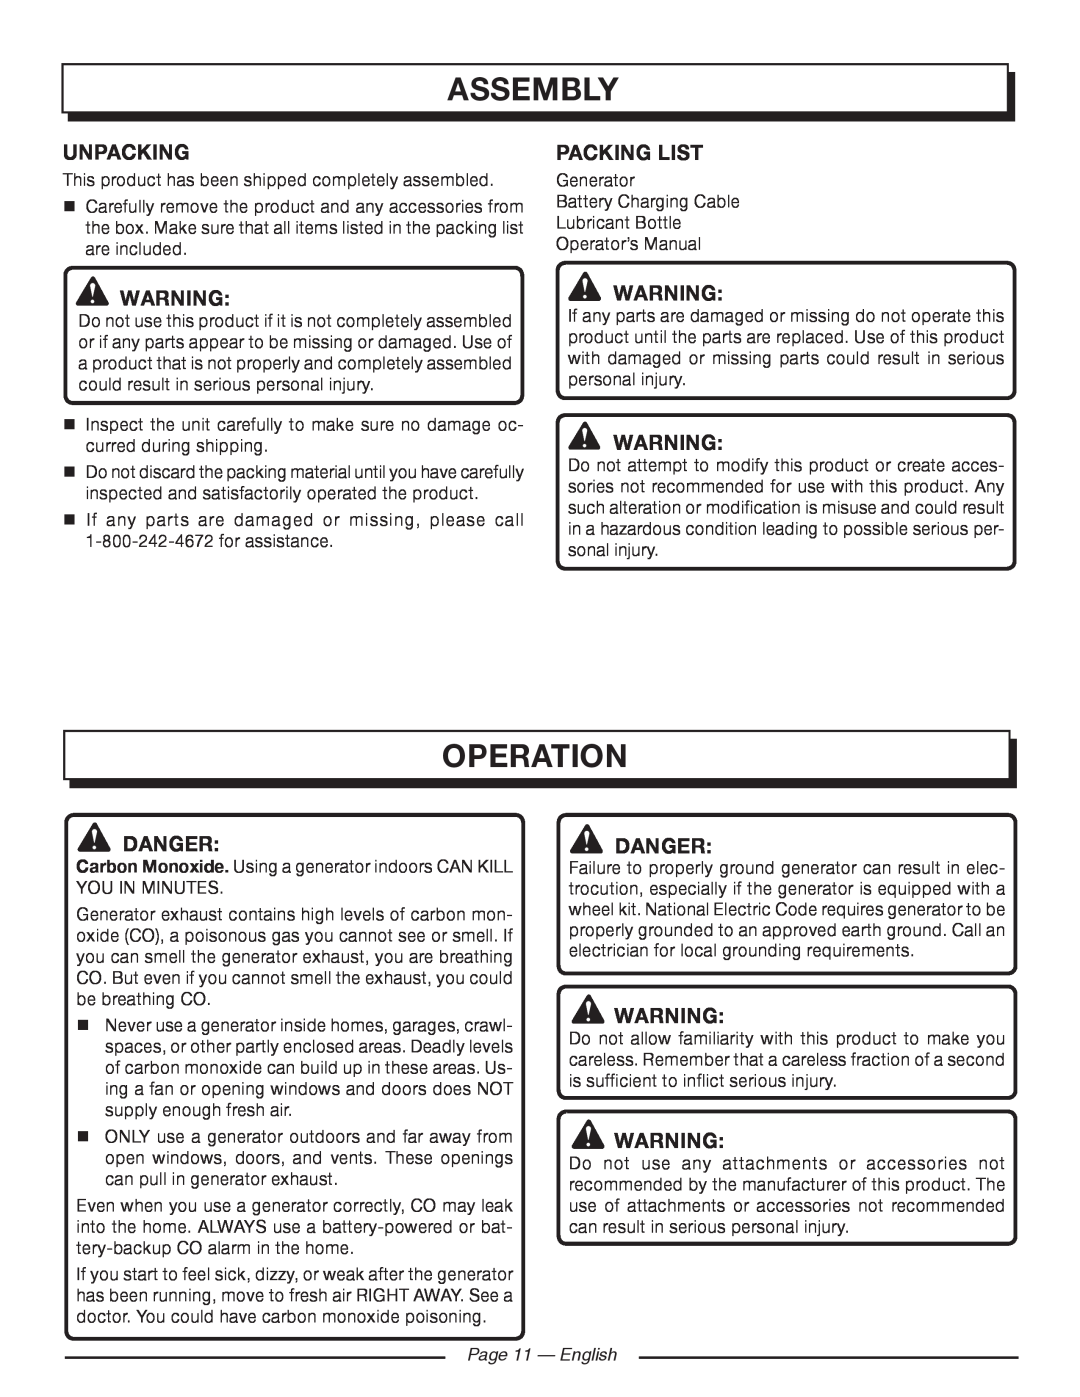 Homelite HGCA1400 manuel dutilisation Assembly, operation, Unpacking, packing list, Danger, danger, Page 11 - English 